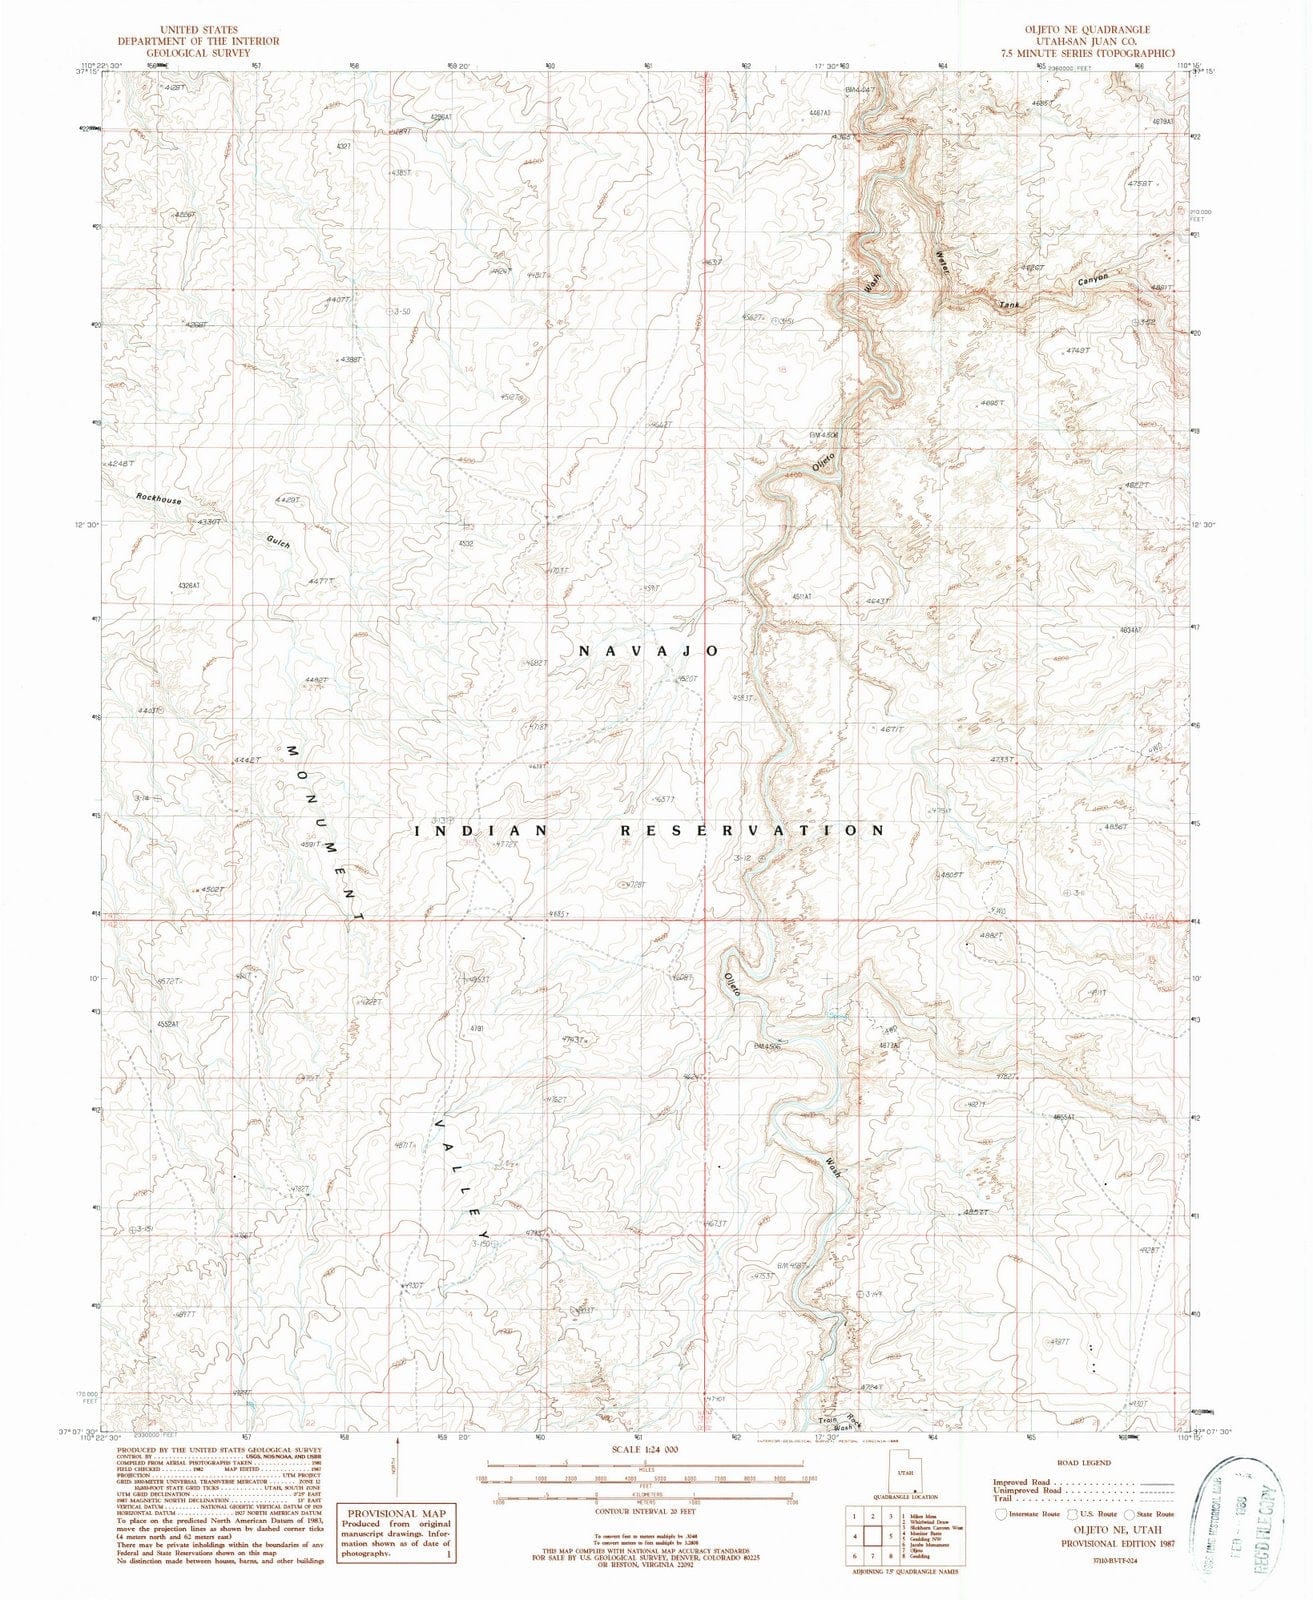 1987 Oljeto, UT - Utah - USGS Topographic Map